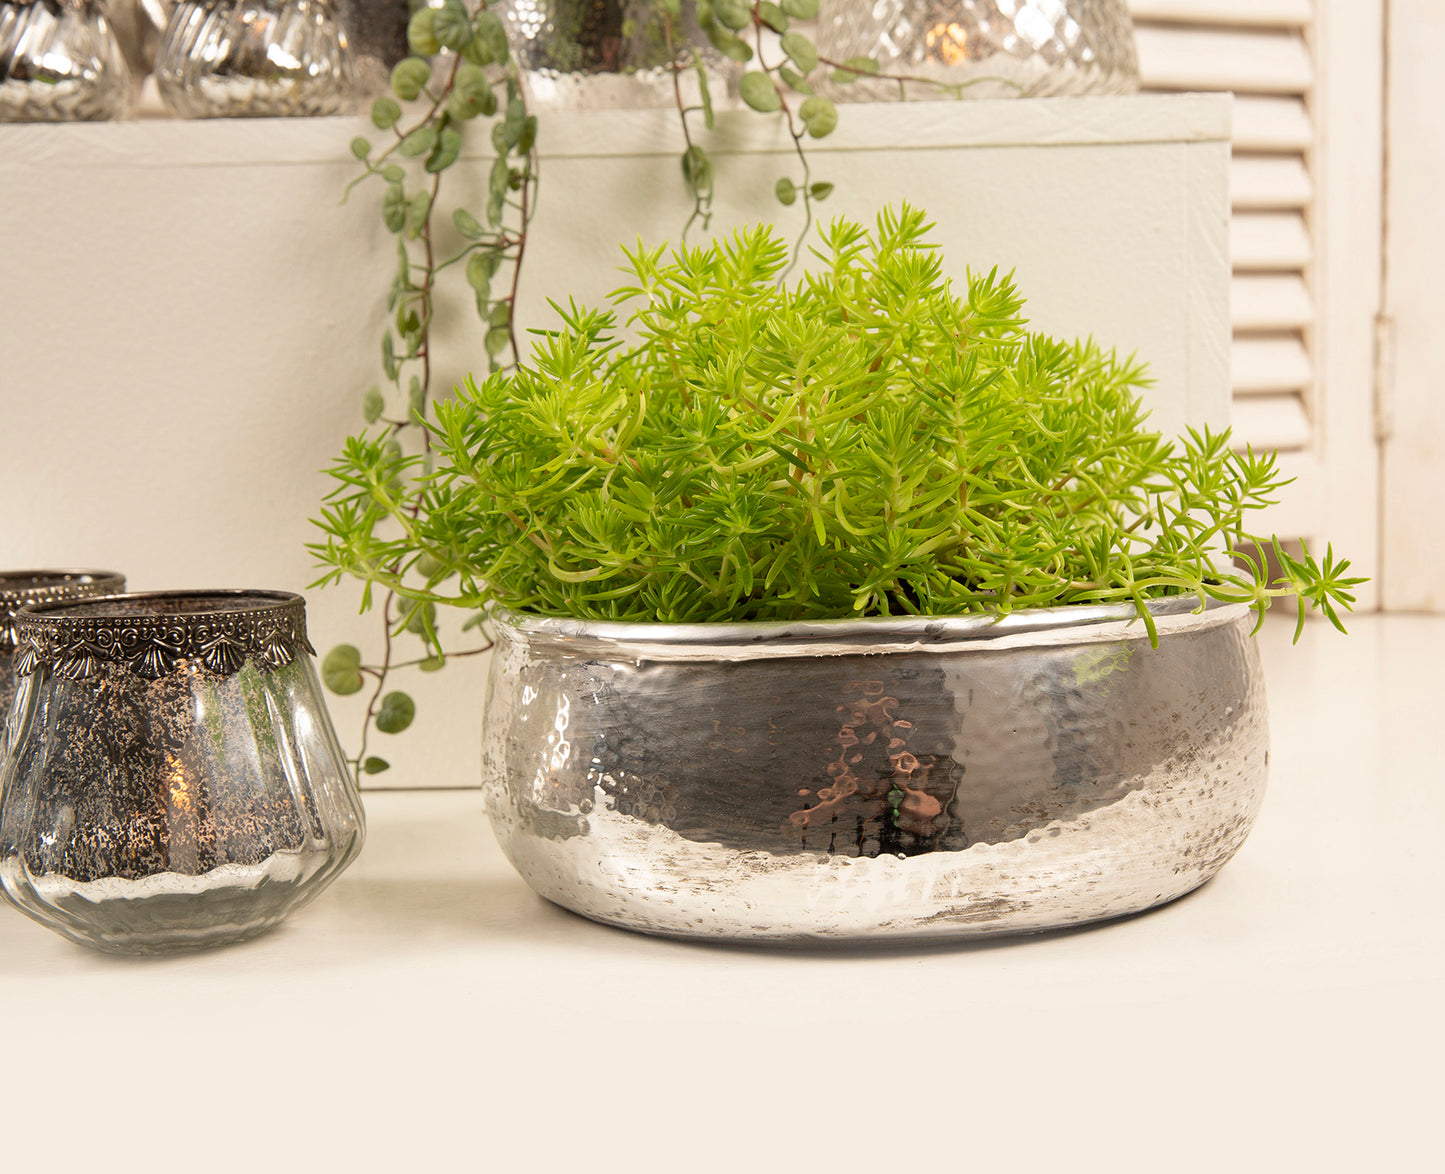 La Vida - Large silver bowl for plants